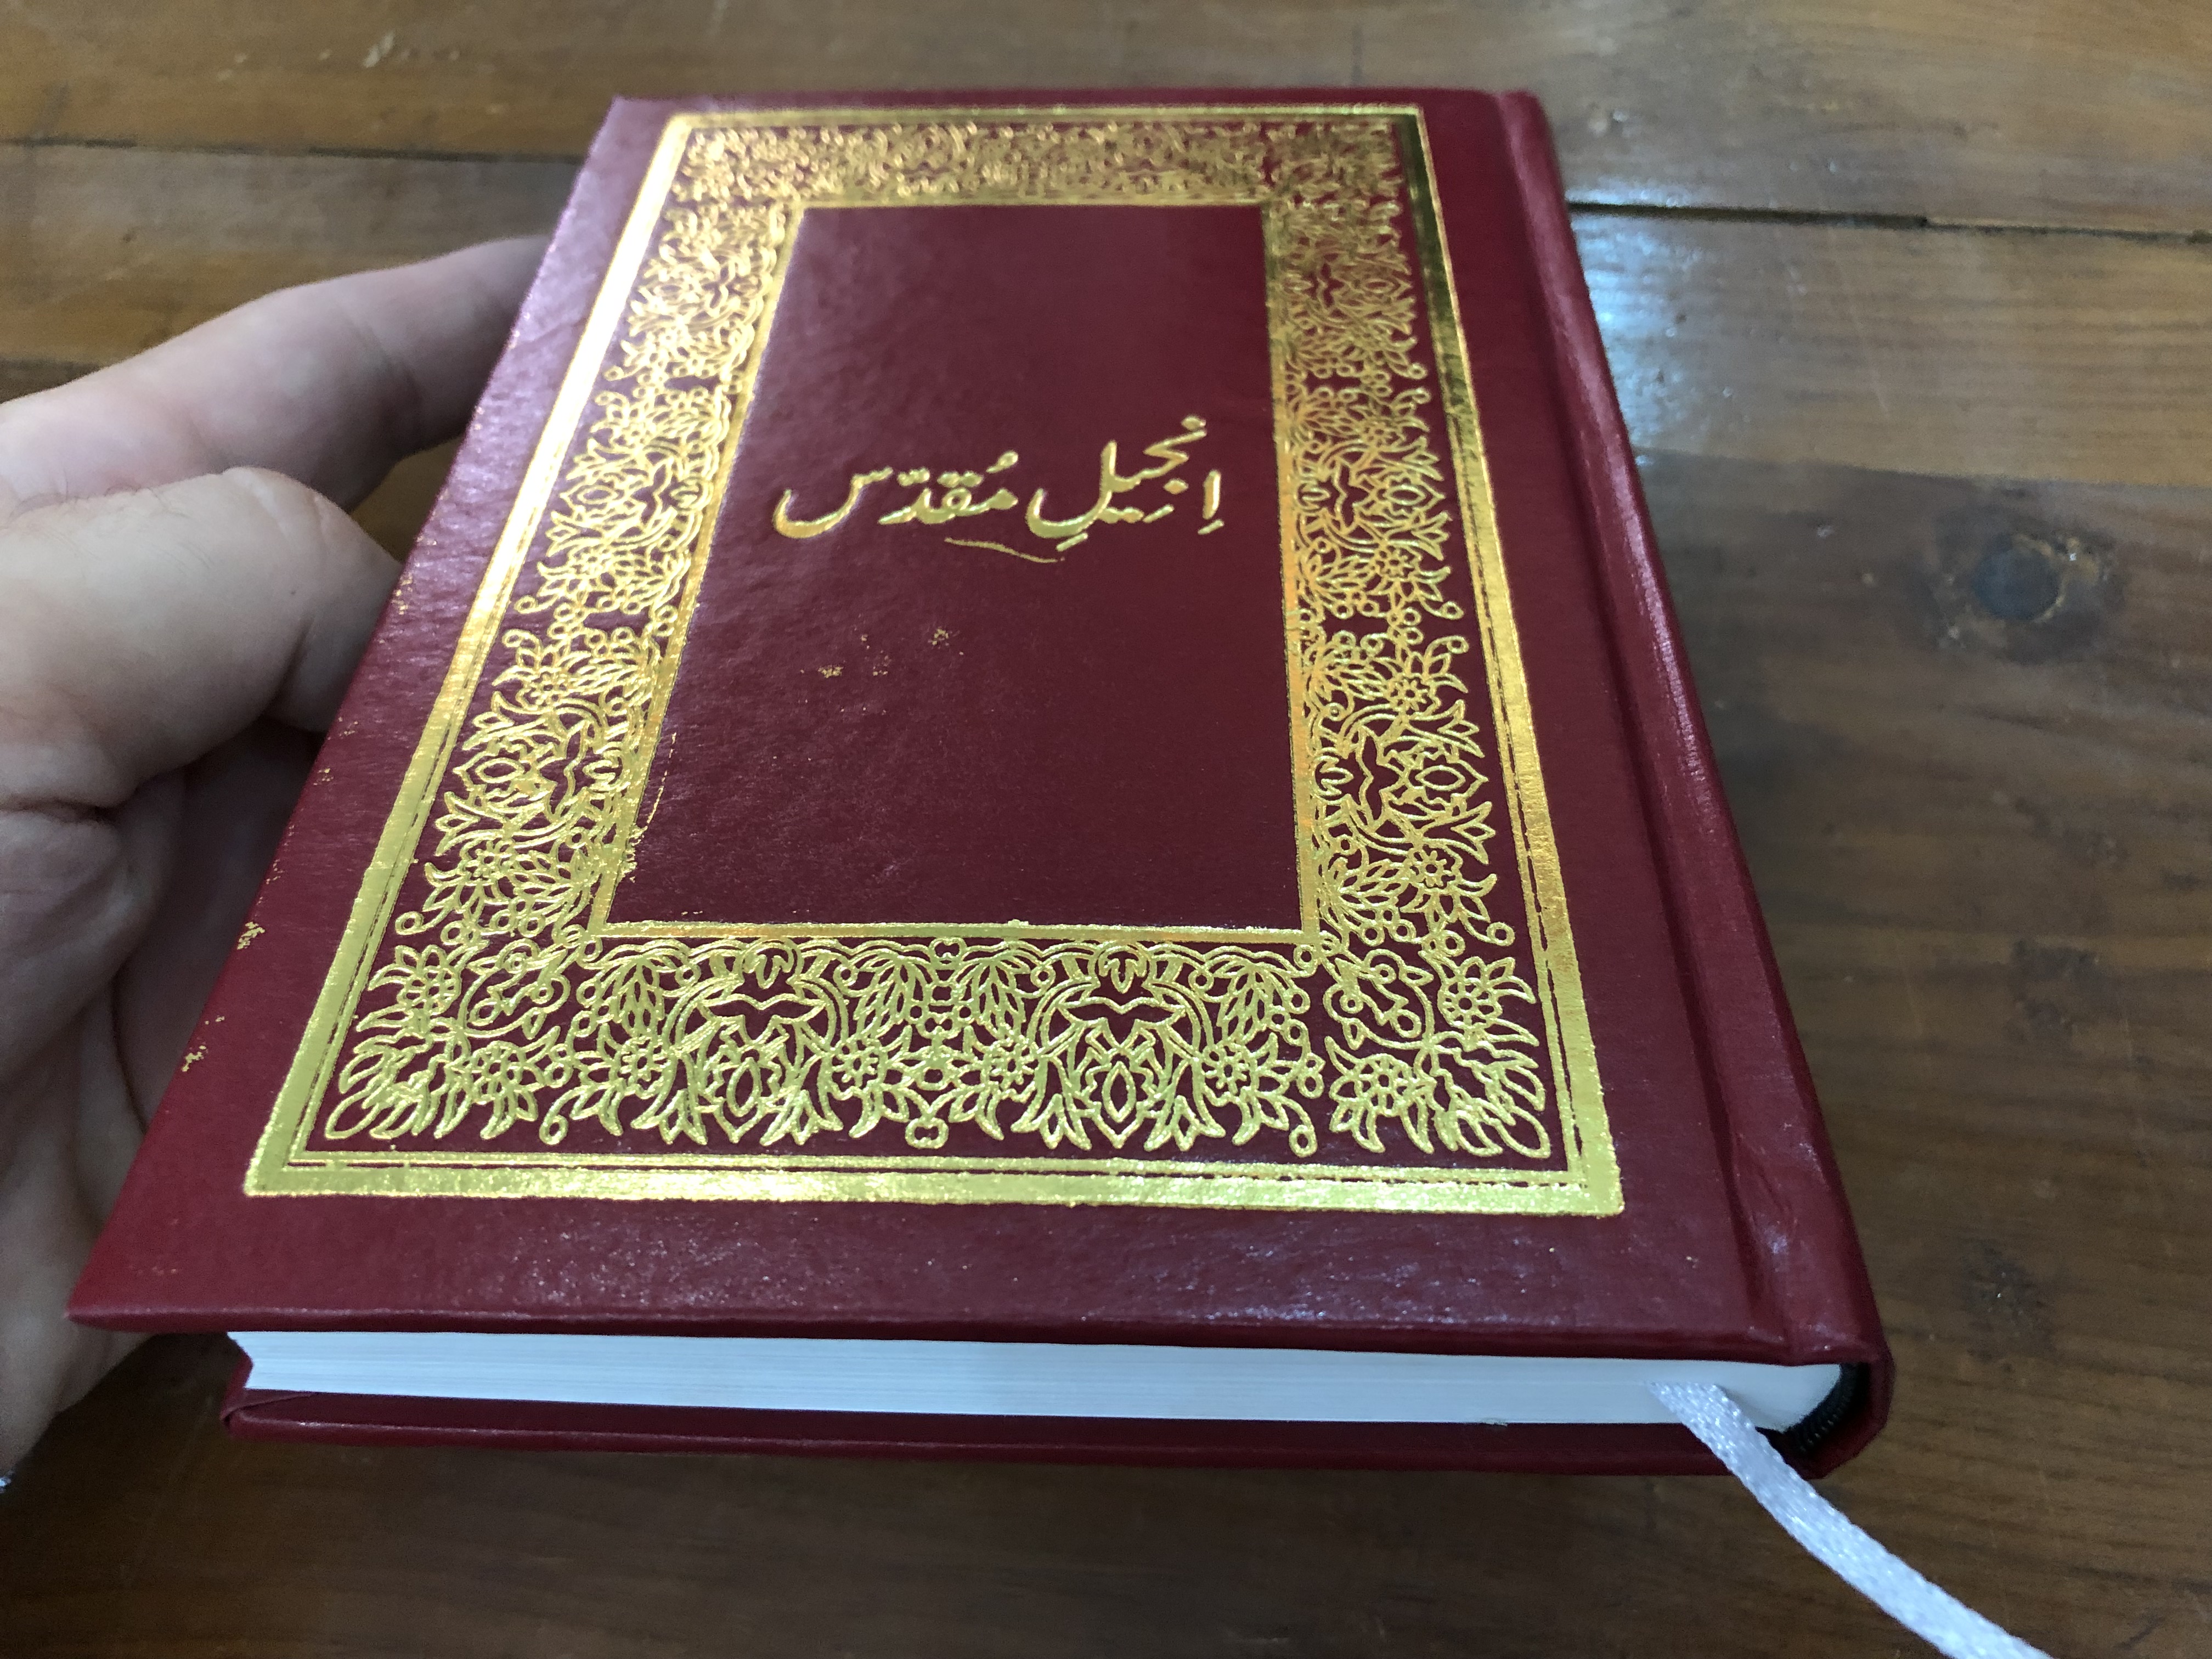 the-new-testament-urdu-pakistan-bible-society-2018-hardcover-burgundy-11-.jpg